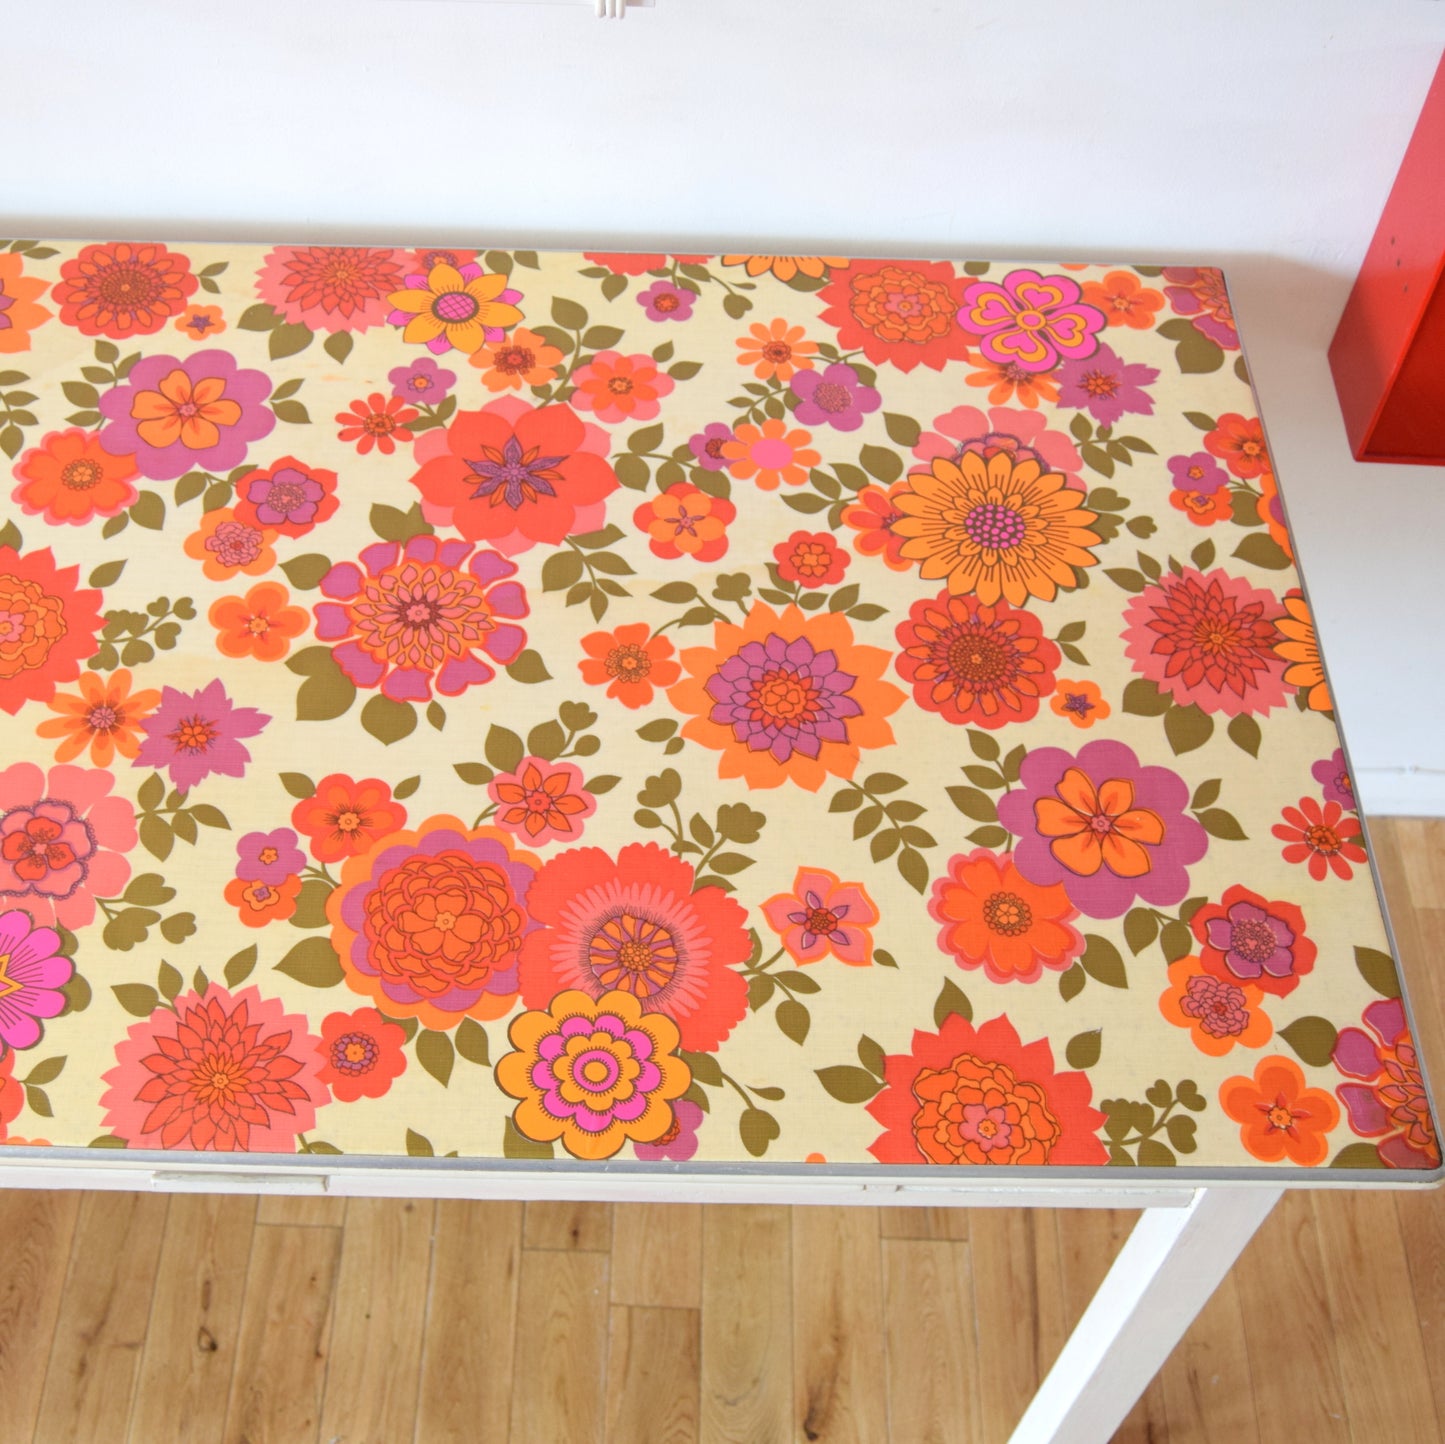 Vintage 1960s Vinyl Covered Table - Flower Power - Pink & Orange